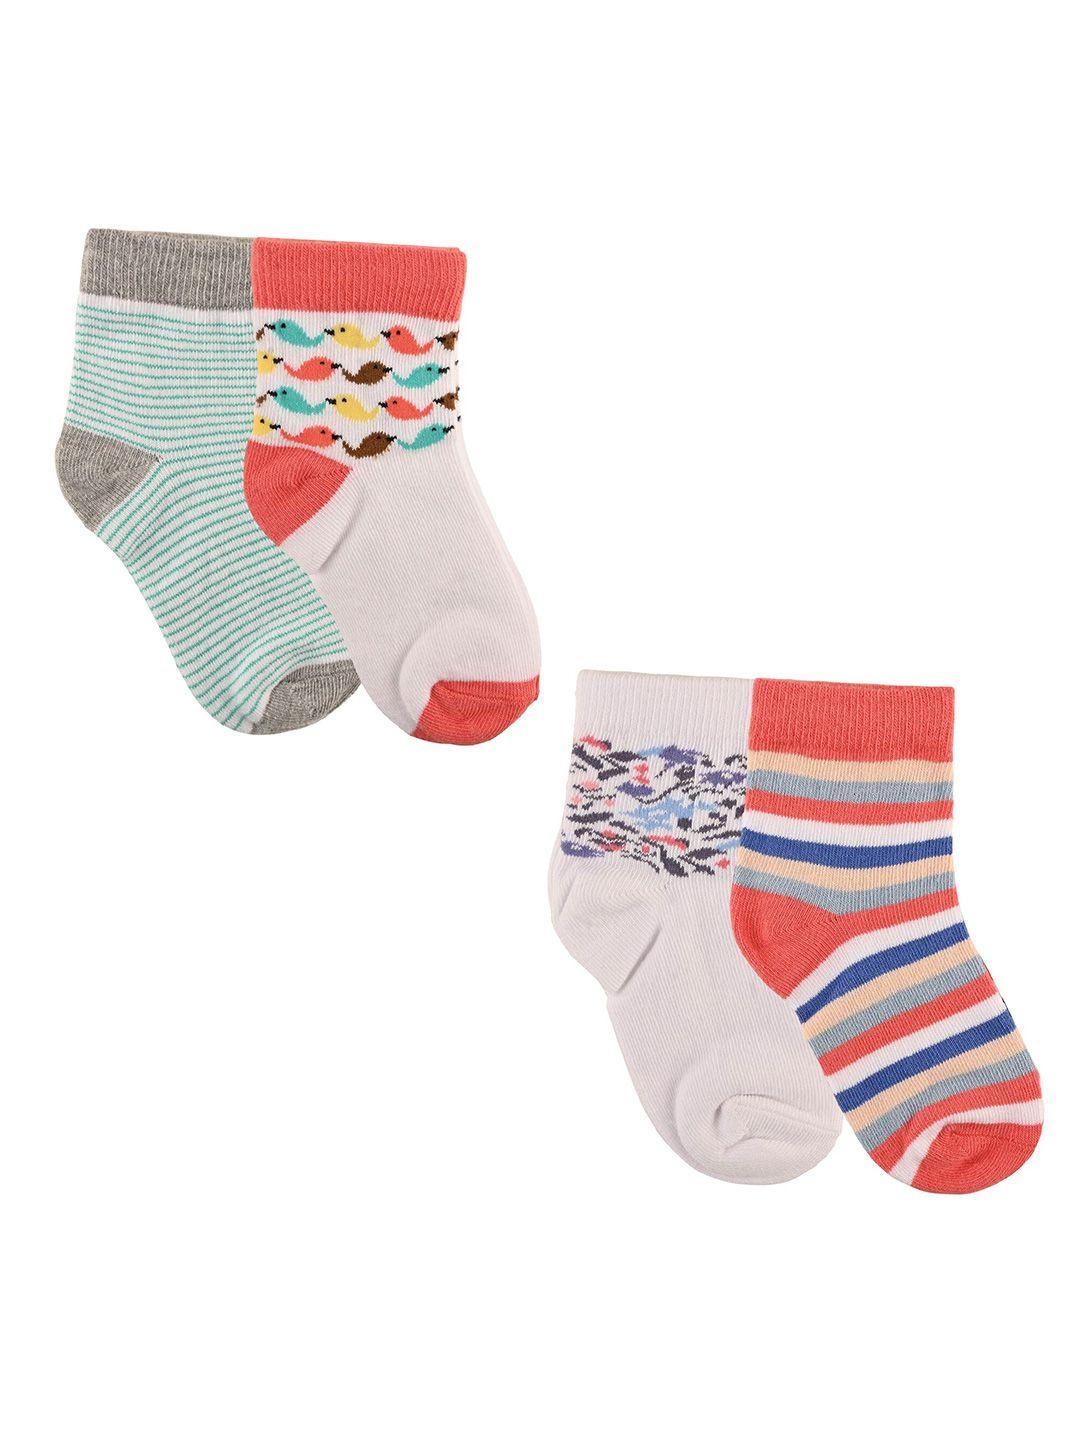 nuluv girls set of 4 patterned ankle -length socks